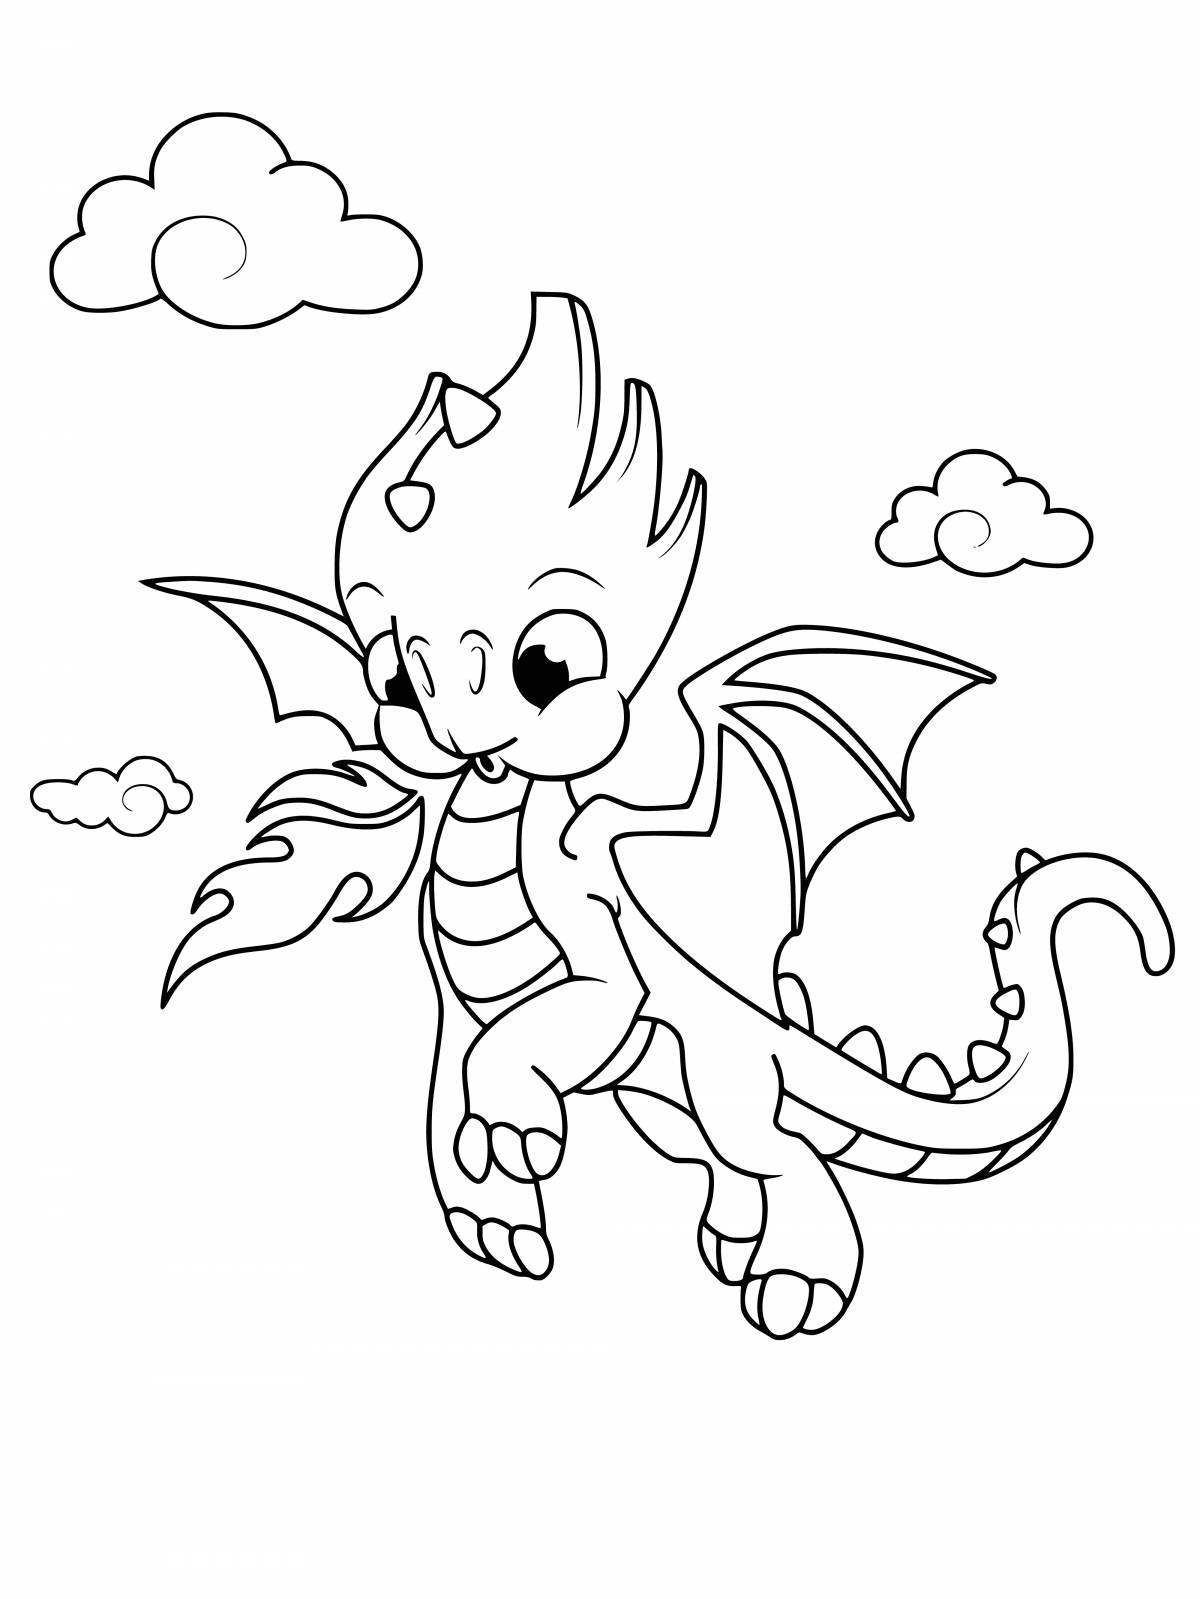 Royal dragon coloring book for kids